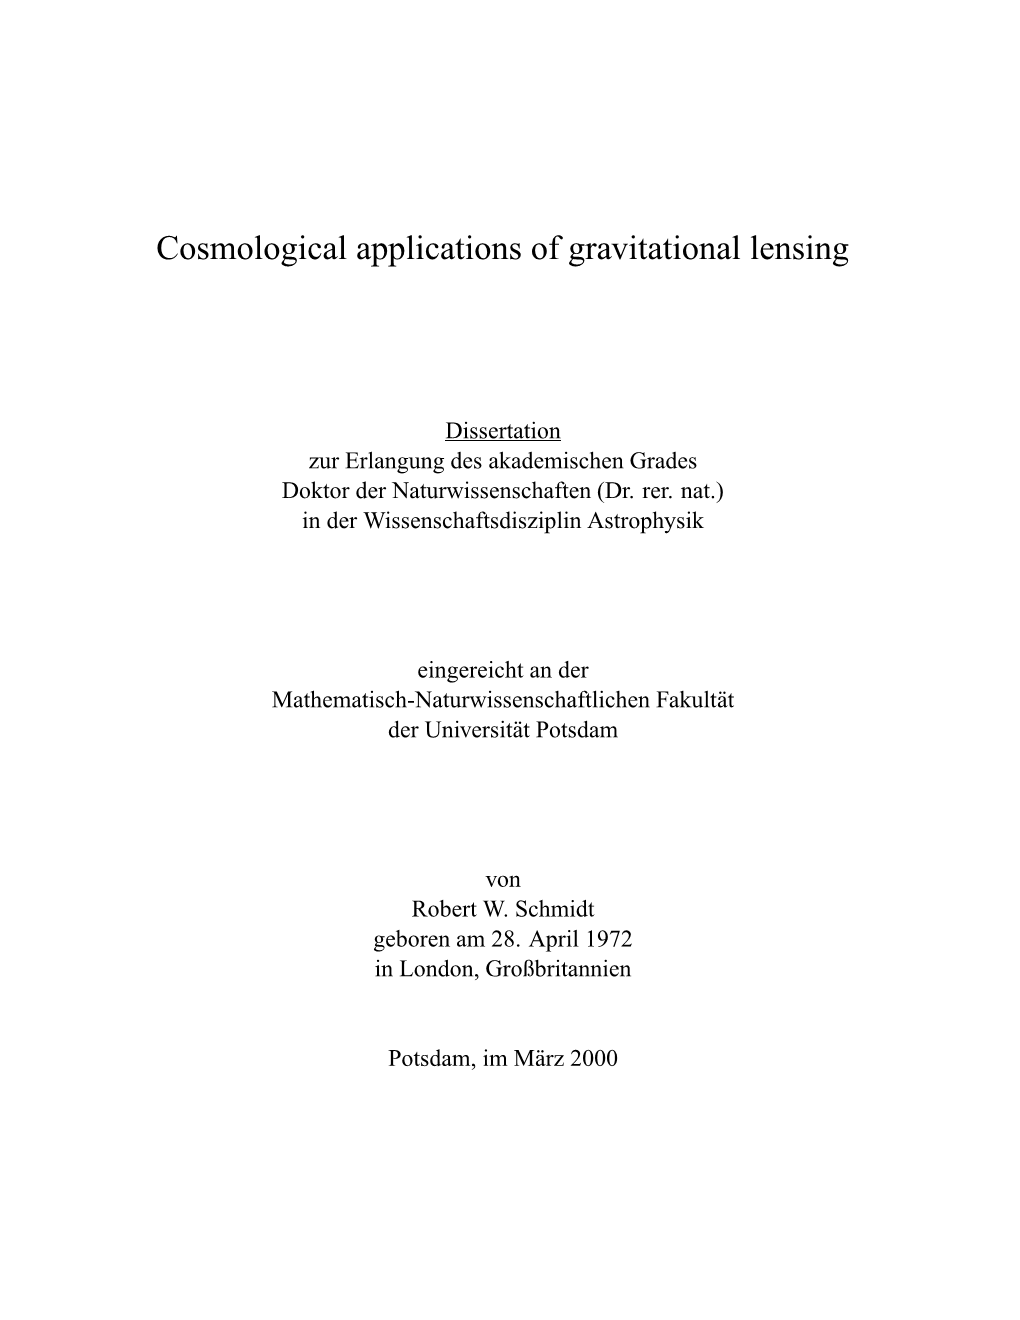 Cosmological Applications of Gravitational Lensing